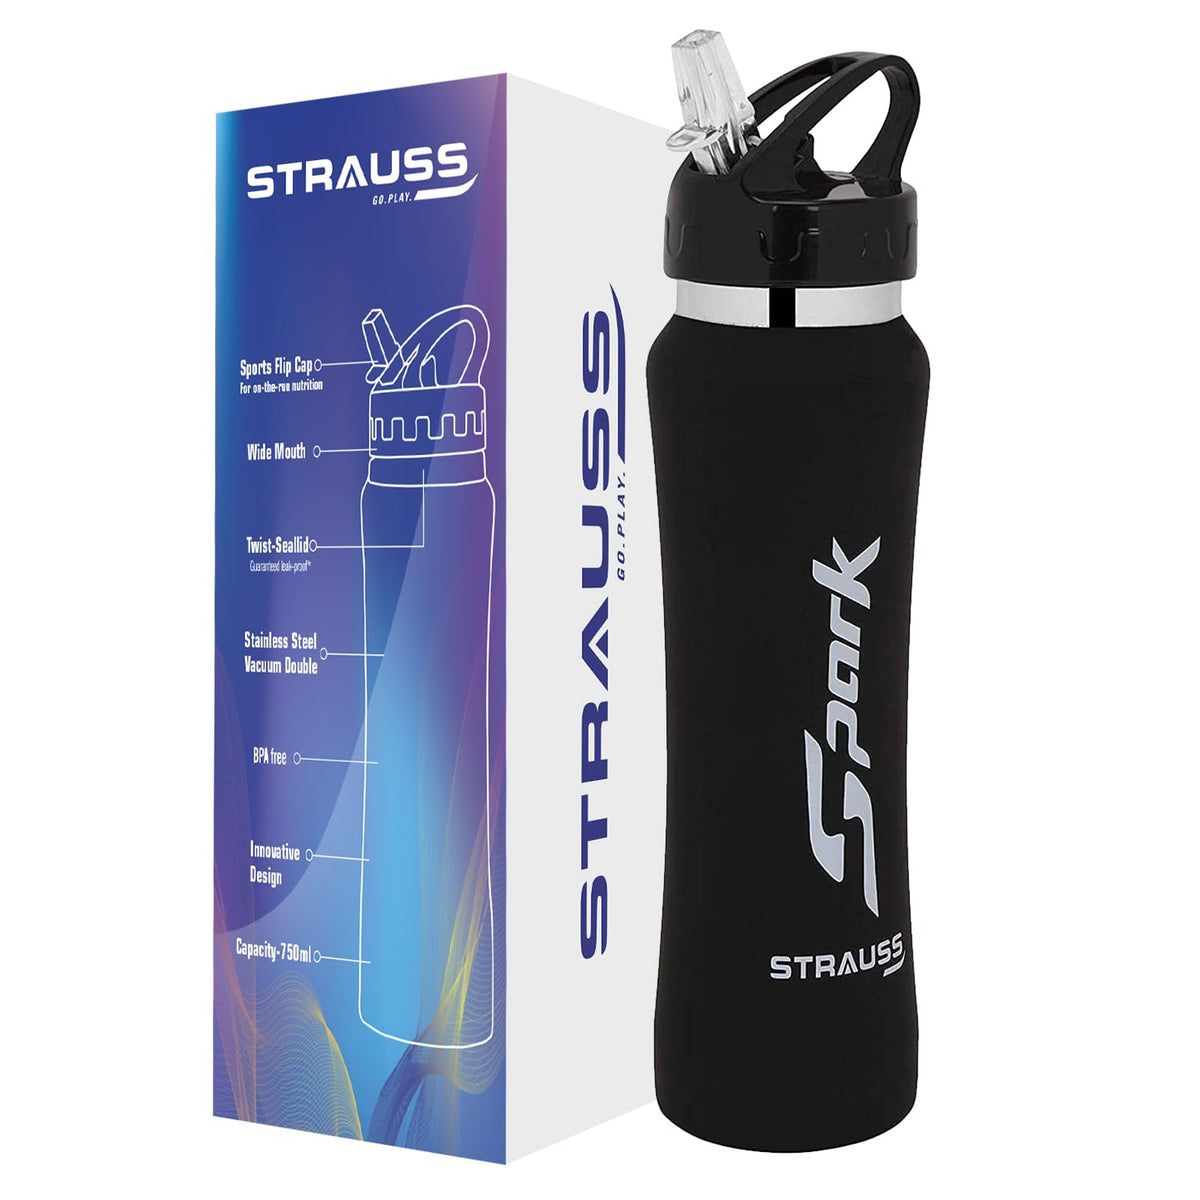 STRAUSS Spark Stainless-Steel Bottle | Leak-Proof Water Bottle | Water Bottle for Travel, Hiking, Trekking, Home, Office & School | Non-Toxic & BPA Free Steel Bottles | 750 ml,(Rubber Finish Black)